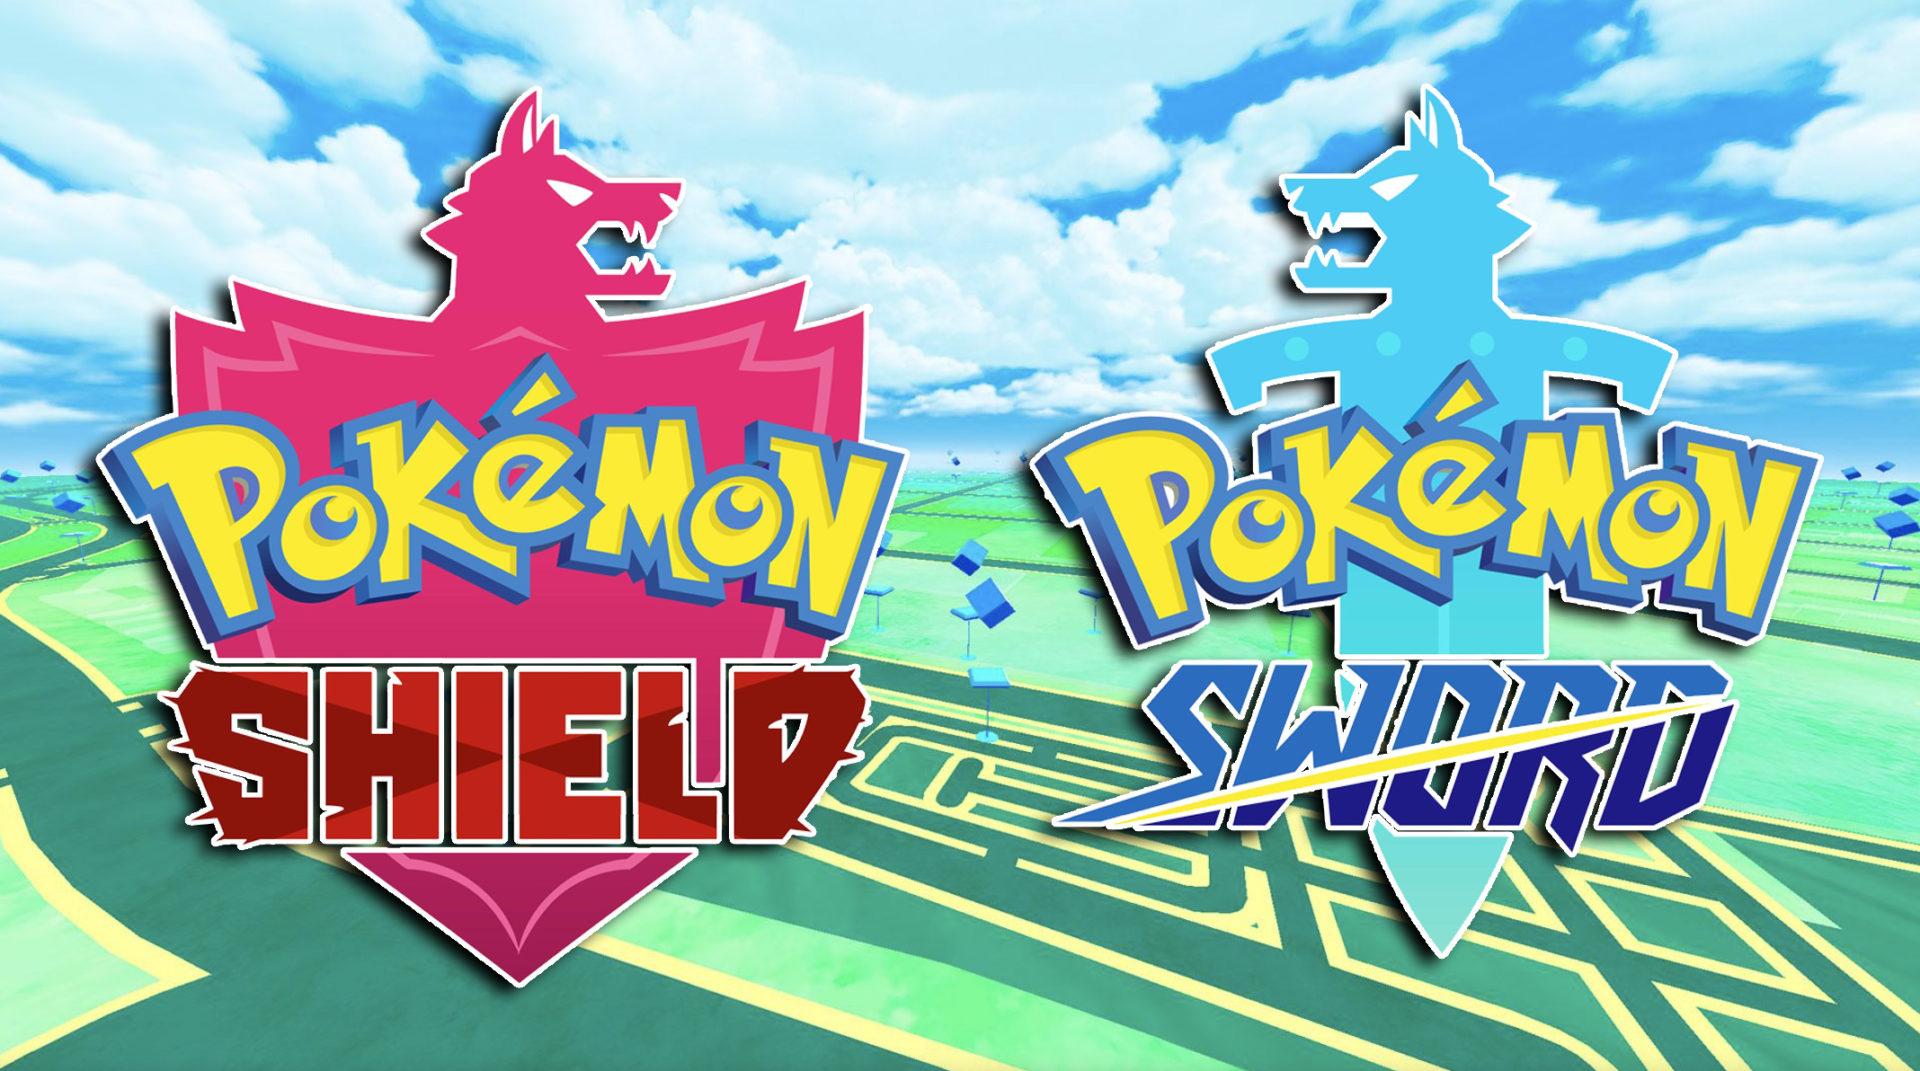 Screenshot of Pokemon Sword & Shield logo over Go background. 